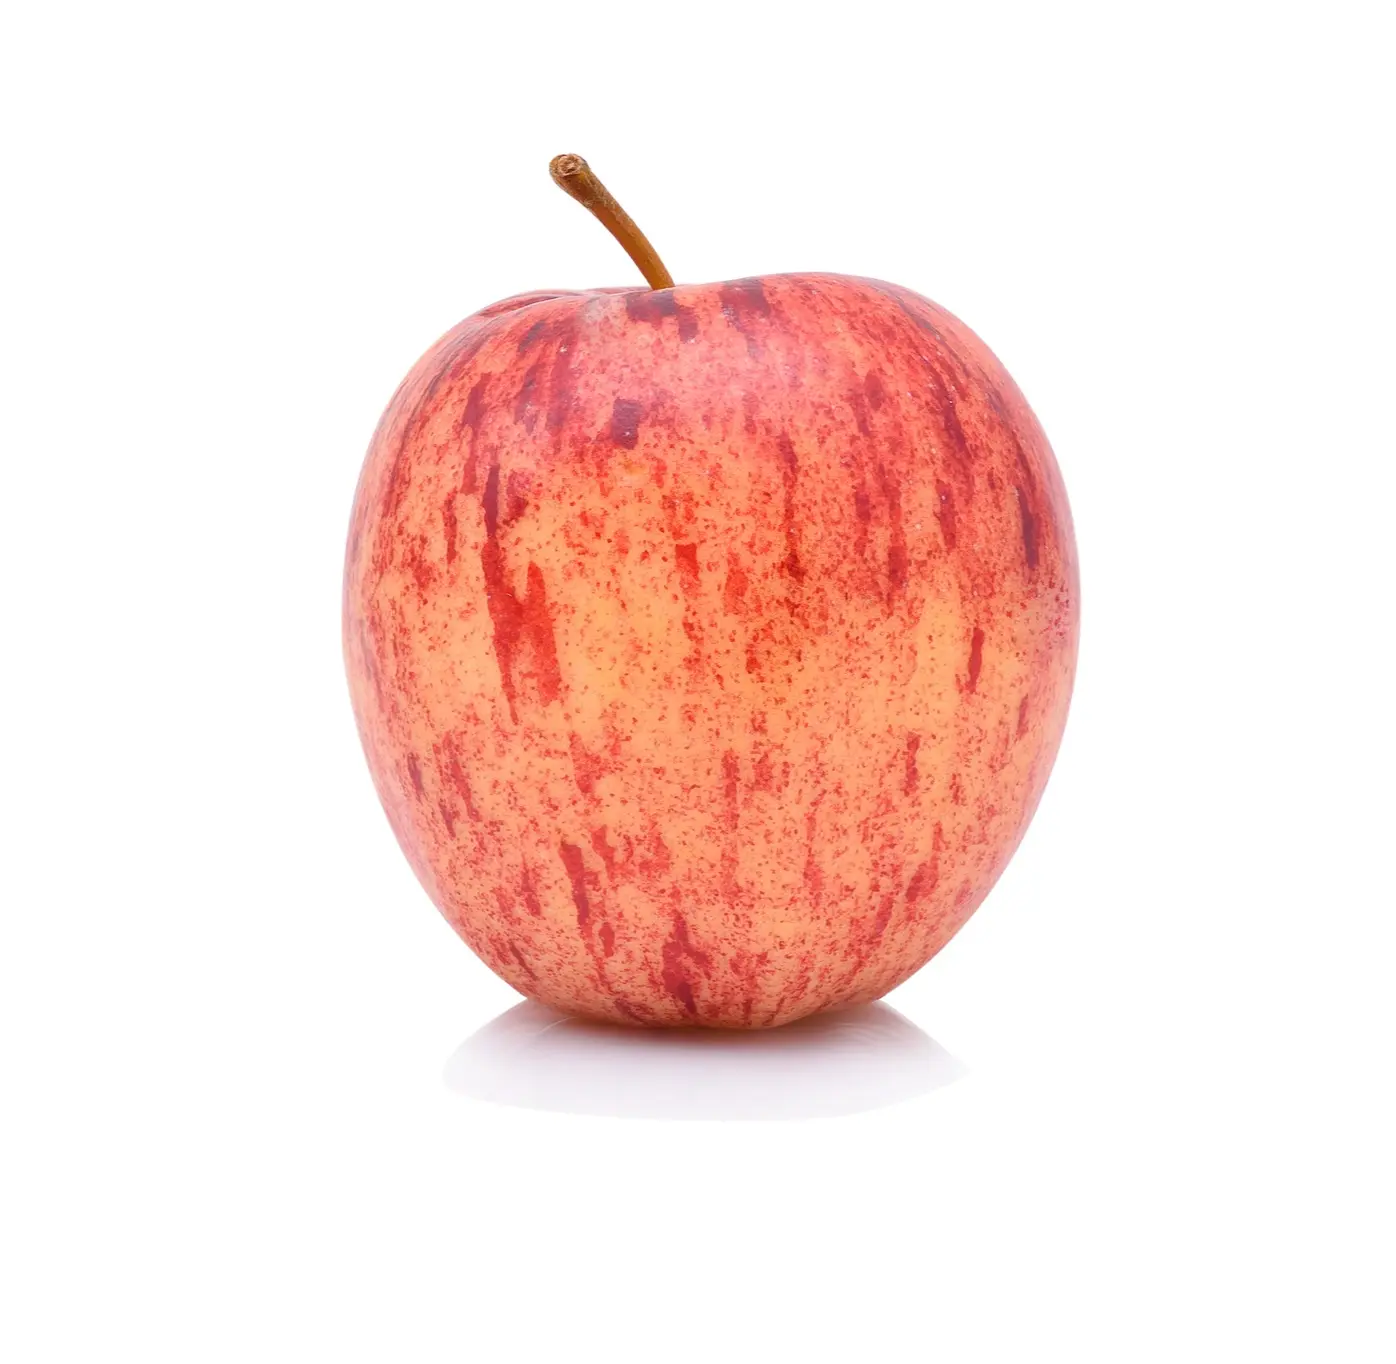 Delicious Wholesale Juicy Apple Fruit Gala Red Apples Starking Green Apple Best Price